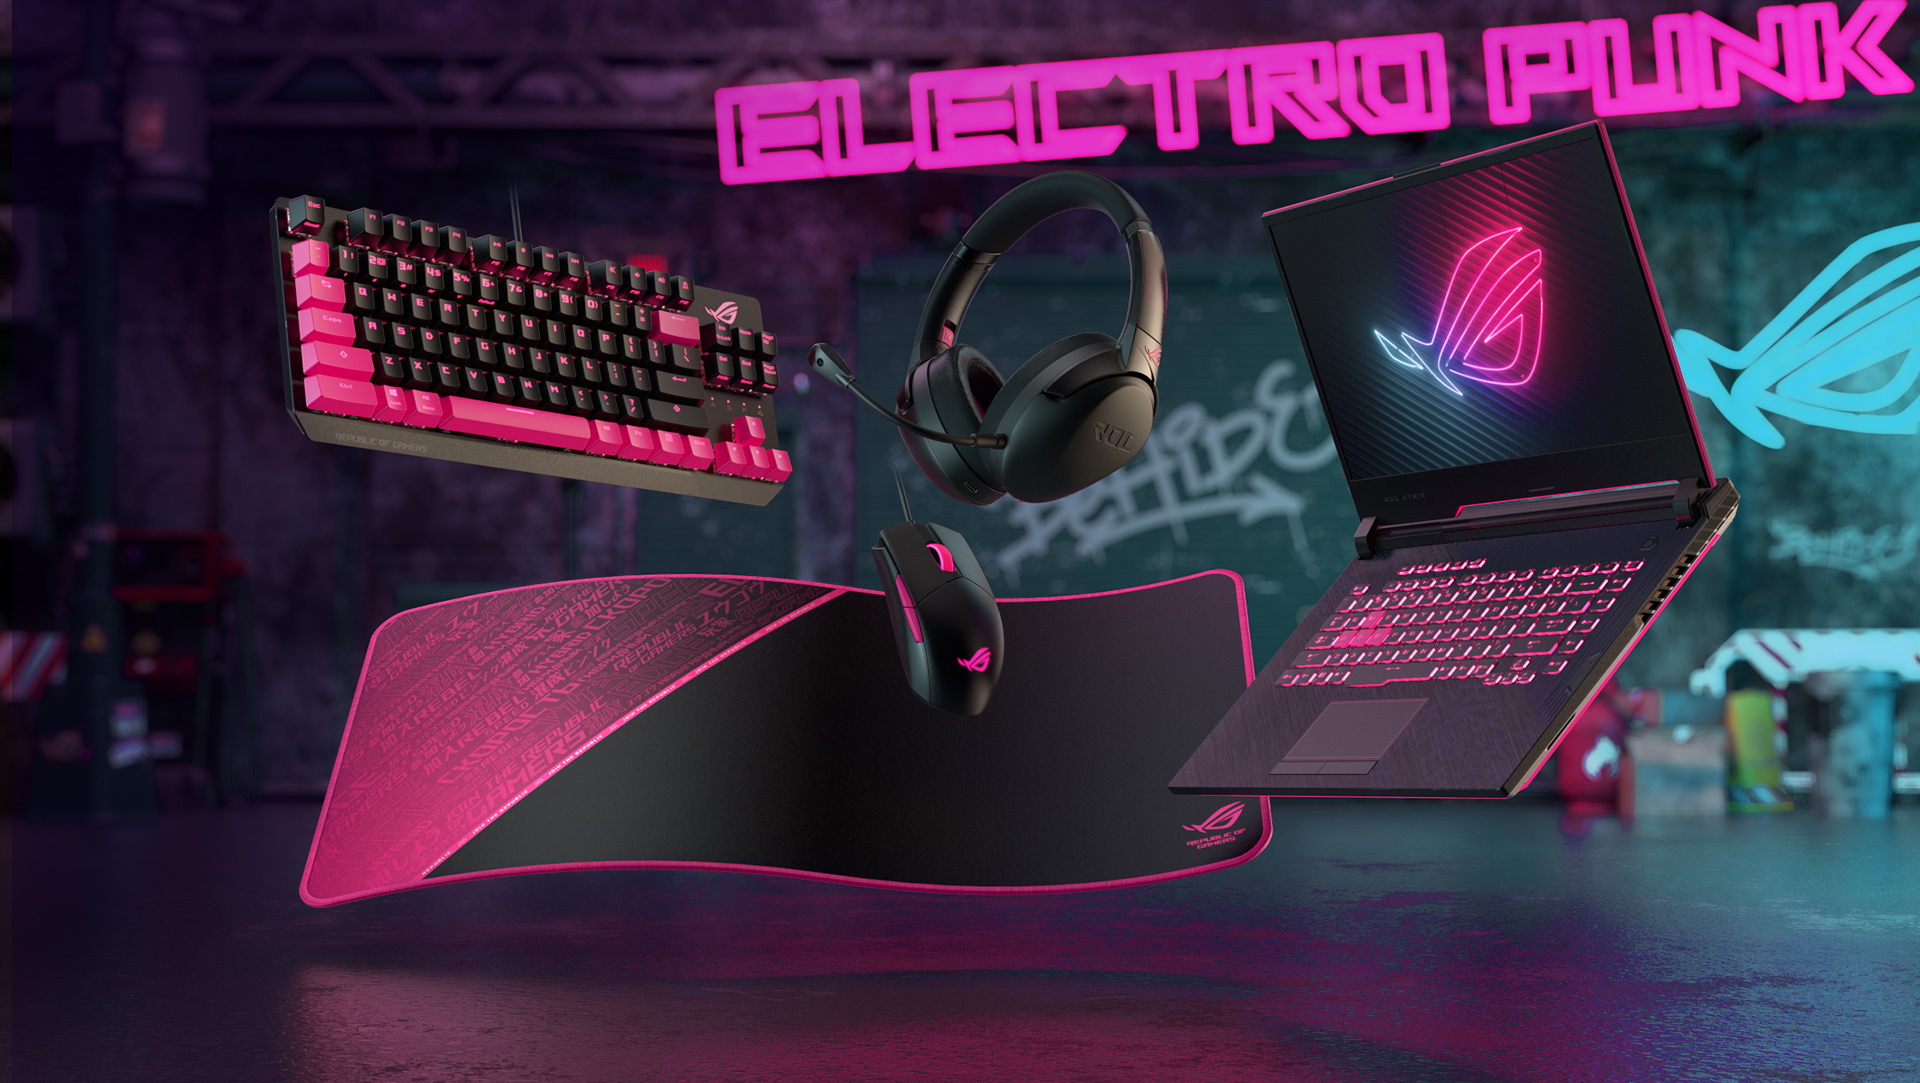 ASUS ROG Sheath Electro Punk Gaming Mauspad pink schwarz extra groß, rutschfest, optimierte Stoffoberfläche